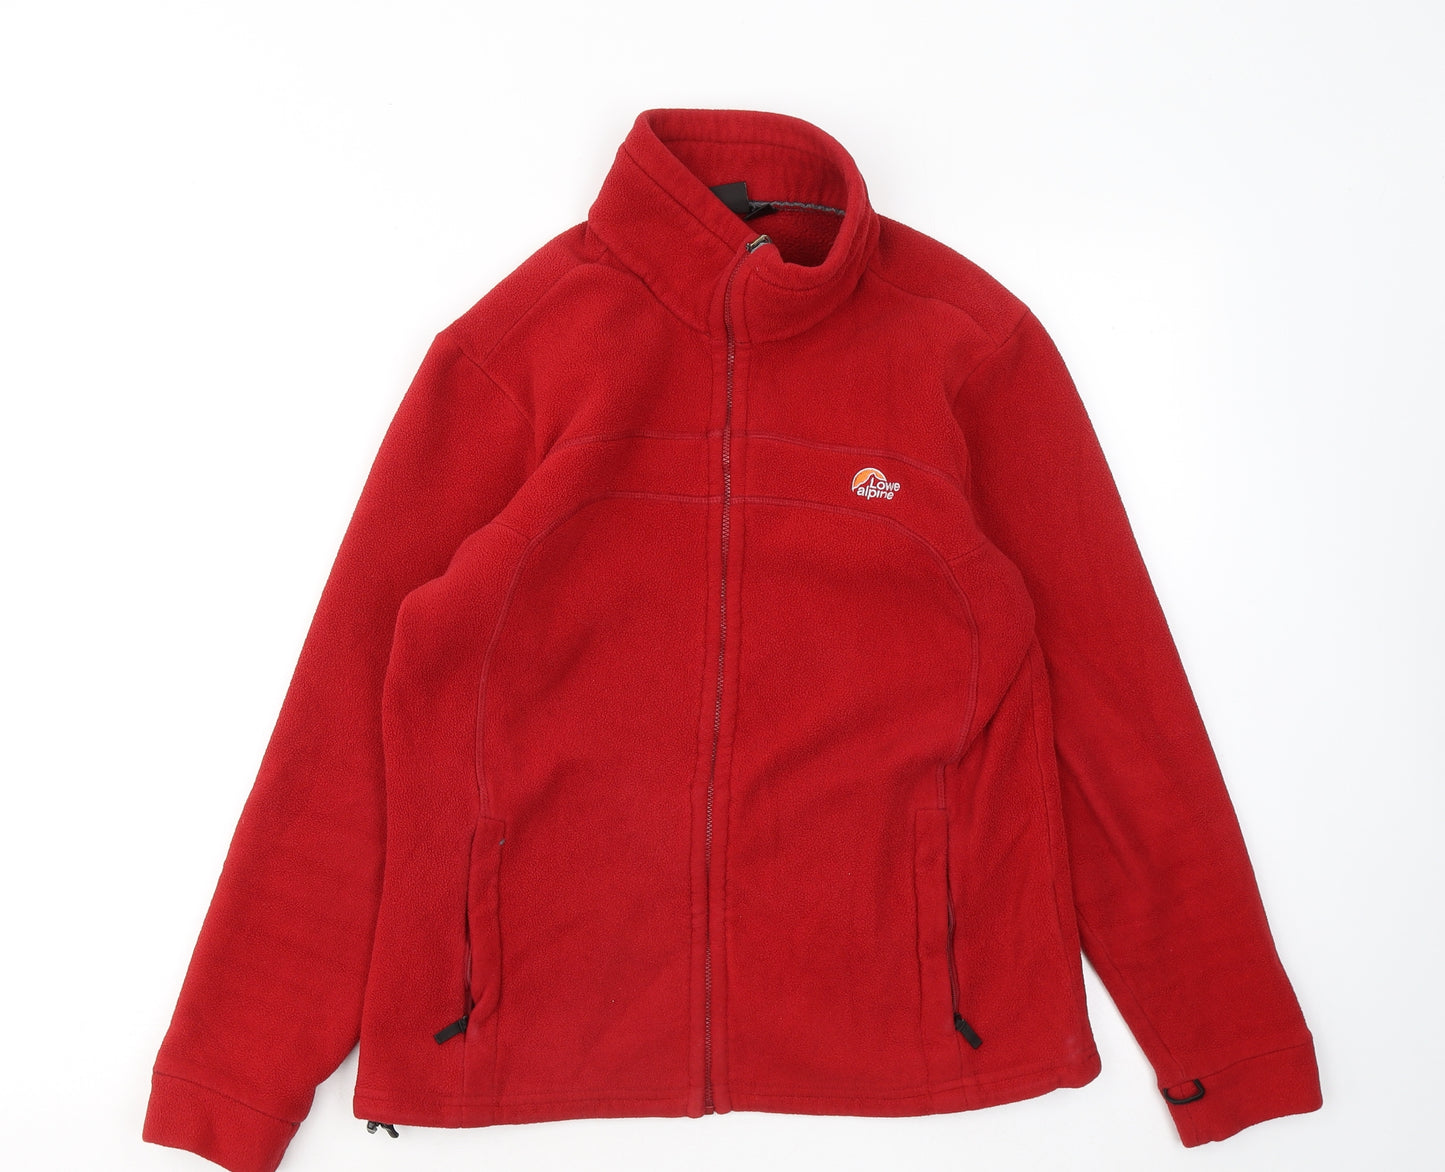 Lowe Alpine Womens Red Jacket Coatigan Size S